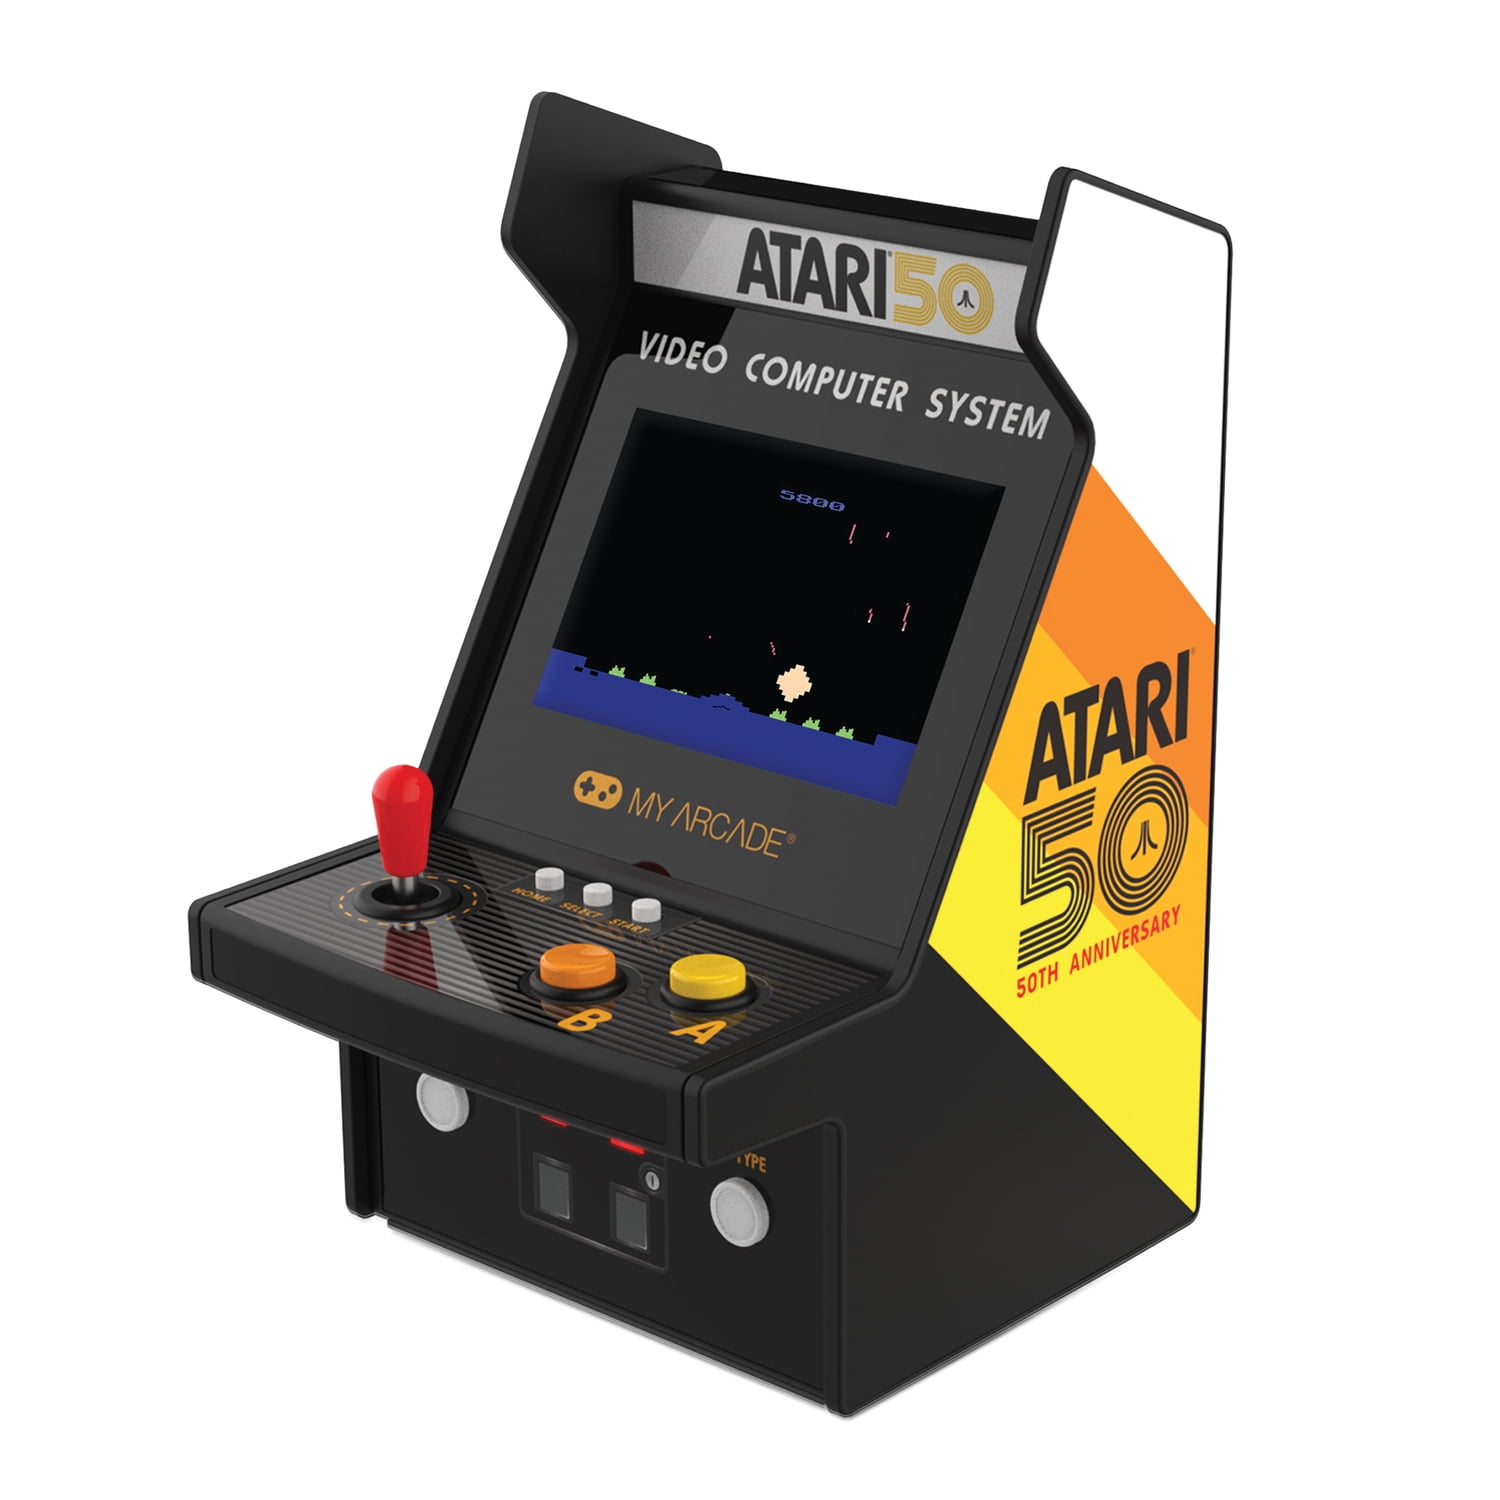 2 players game retro box 3D 4188 in 1 joystick video game arcade stick  console